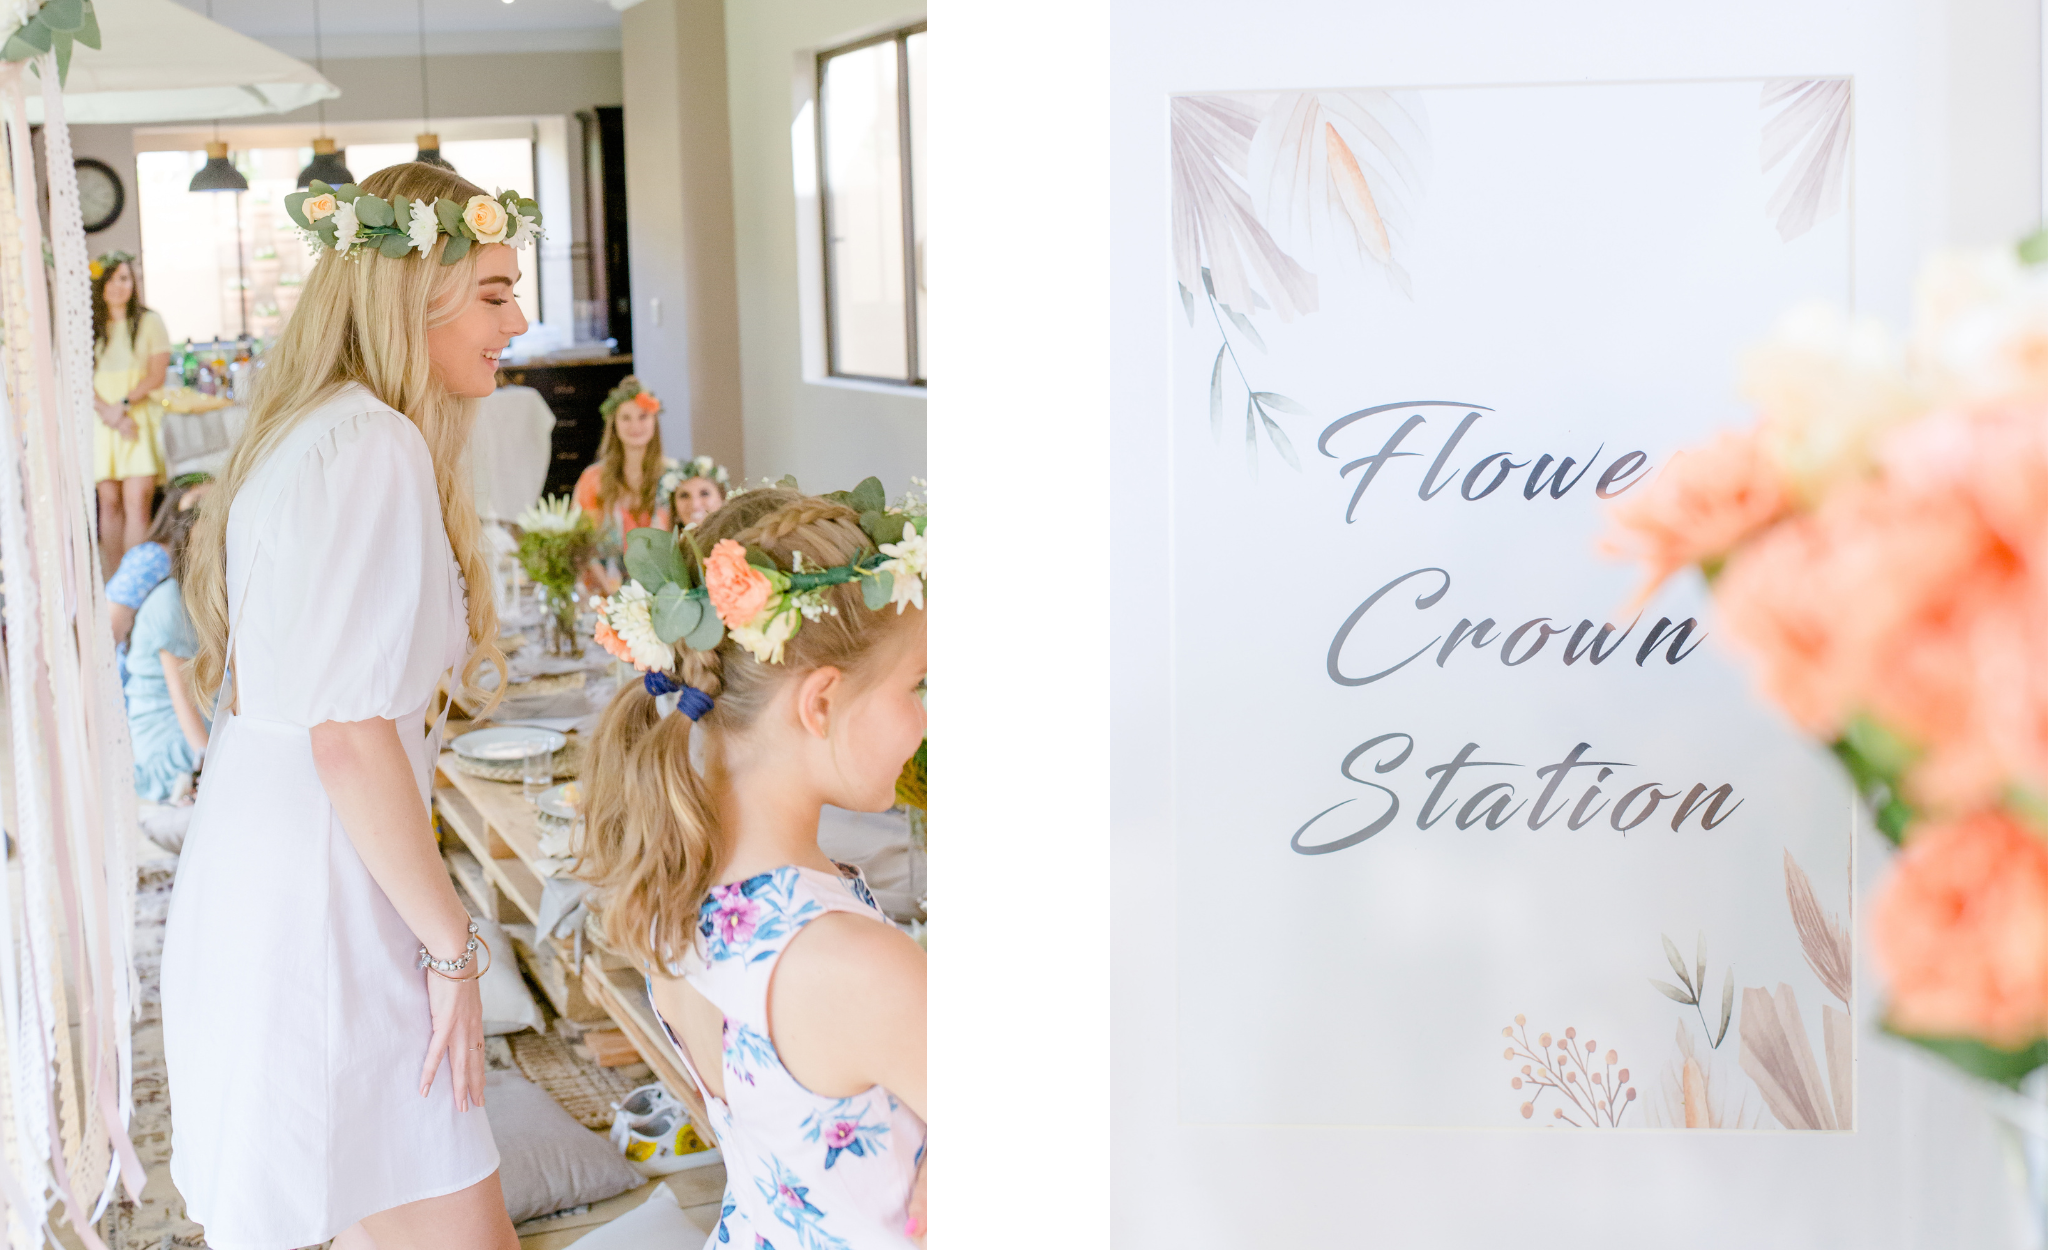 Flower Crown Station